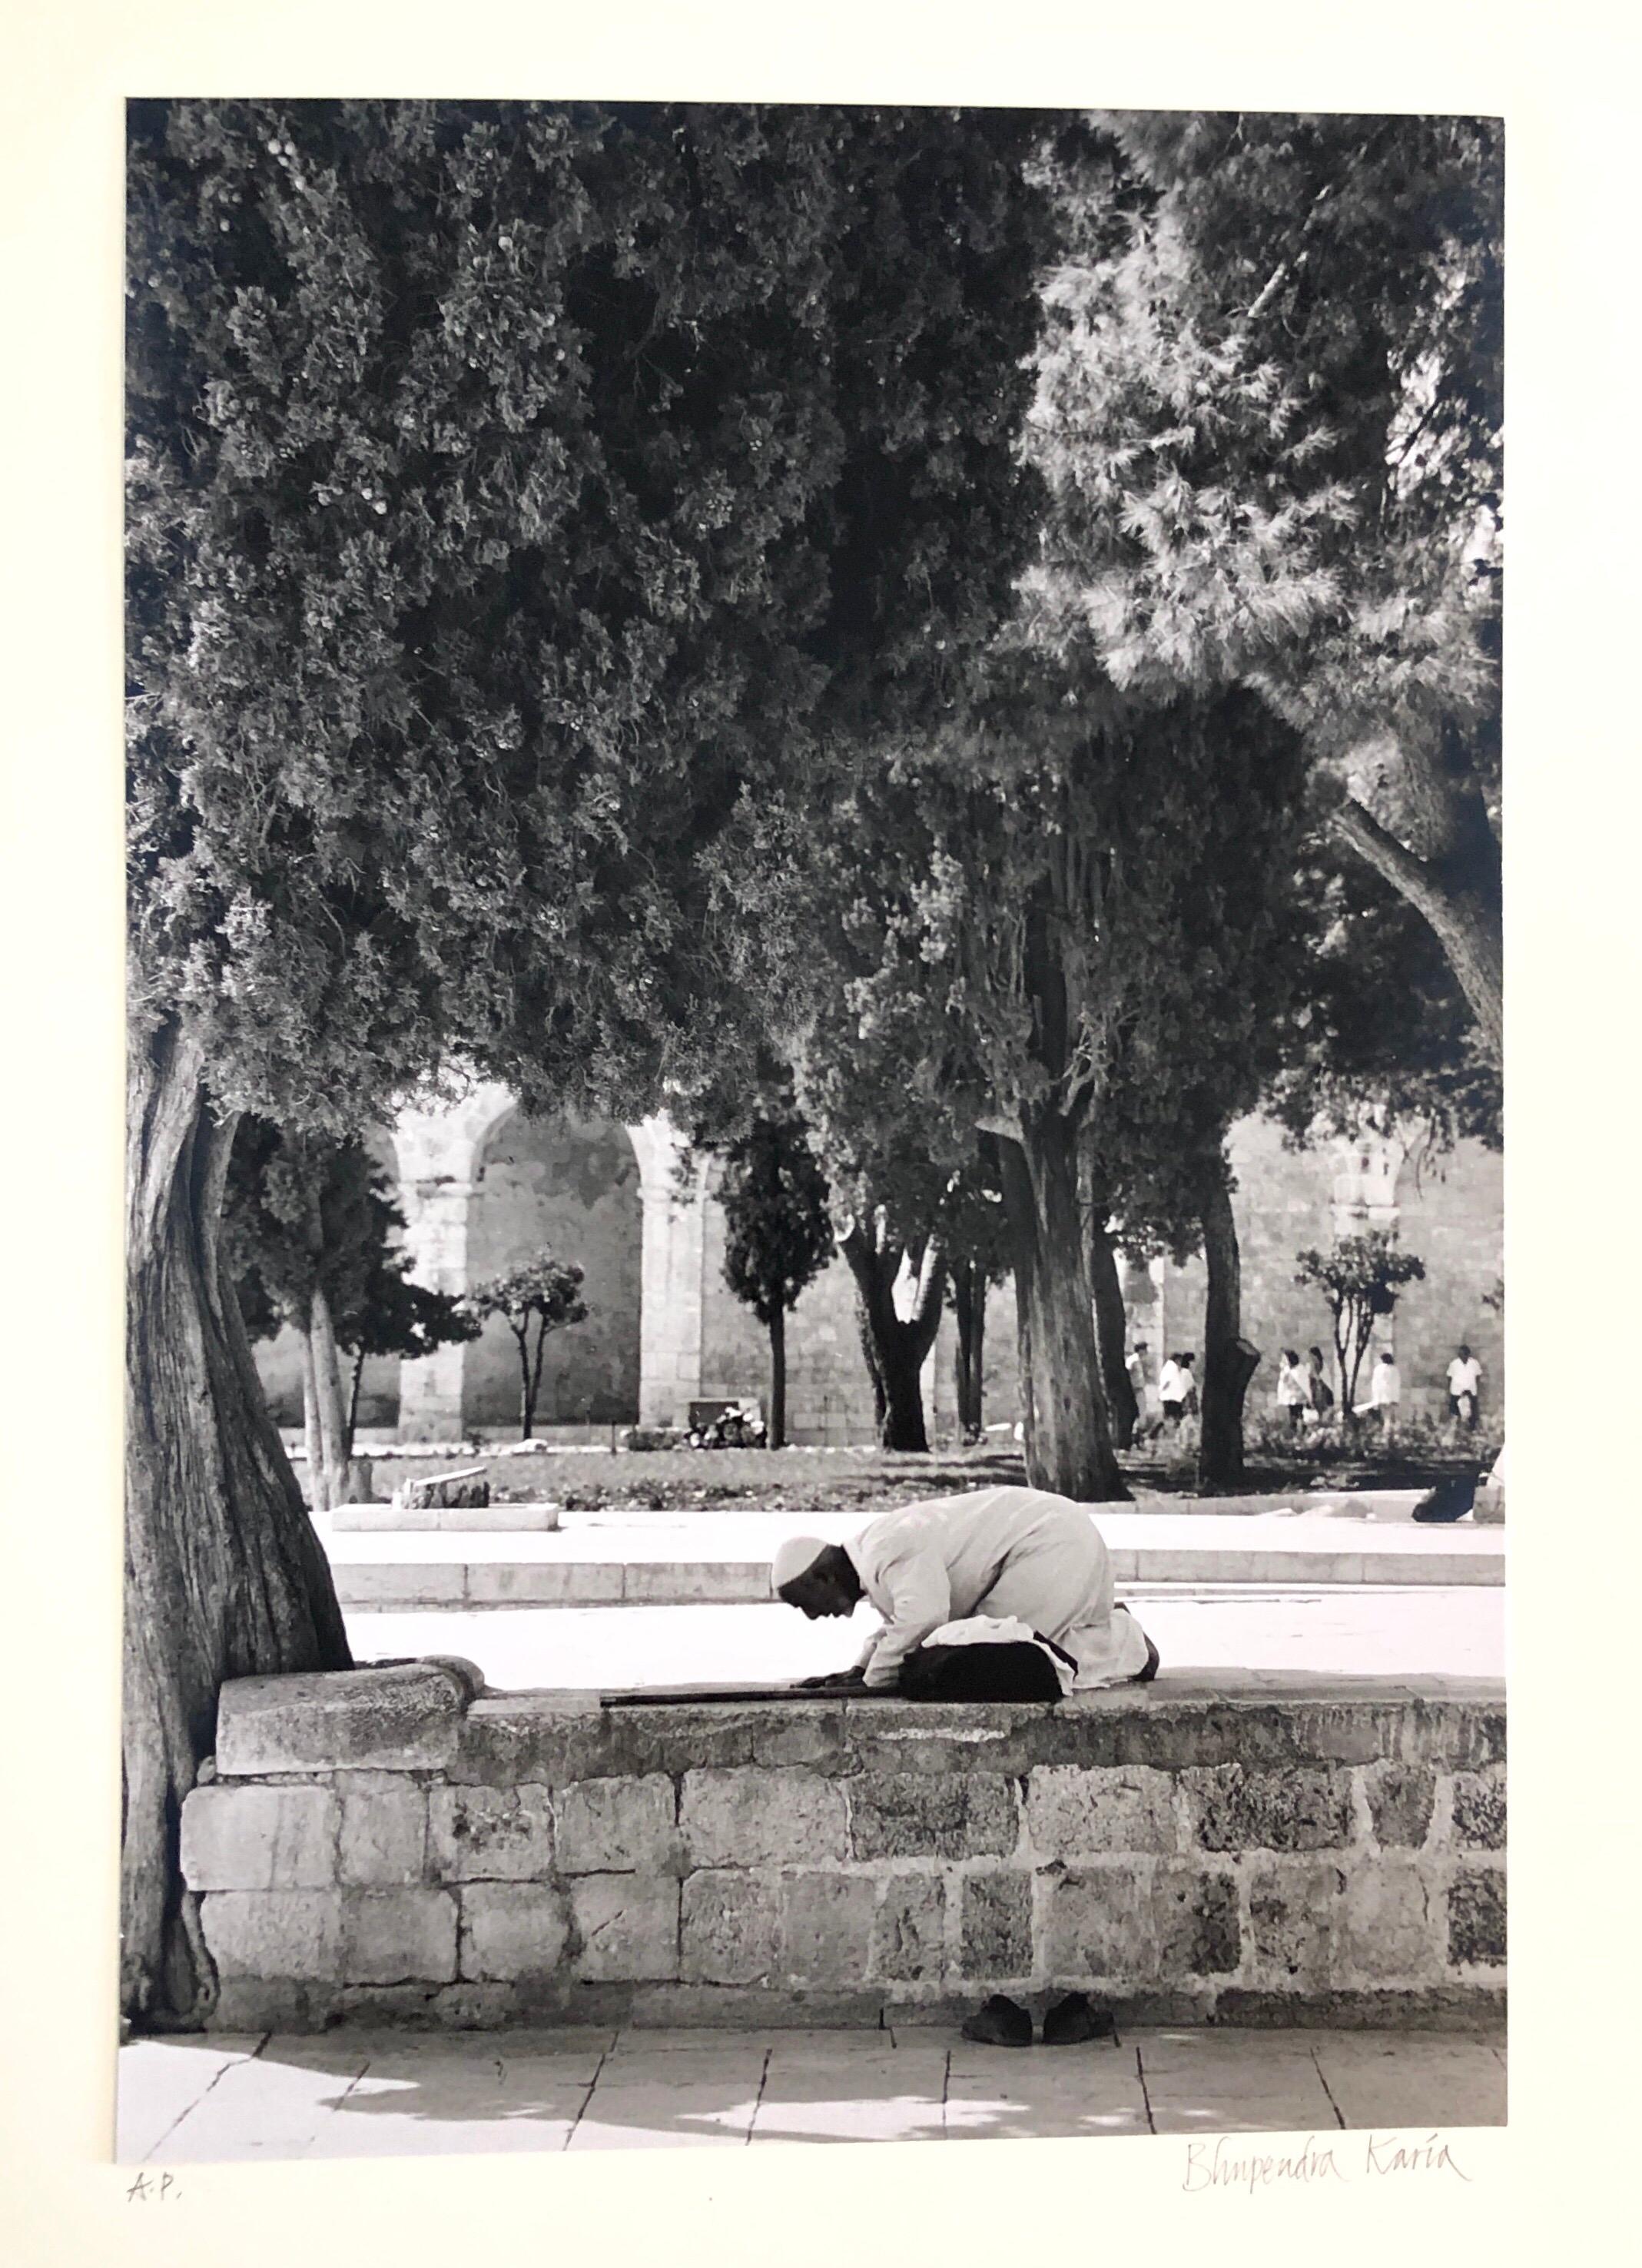 Bhupendra Karia Black and White Photograph - Vintage Silver Gelatin Photograph Al Aqsa Mosque, Jerusalem Temple Mount Photo